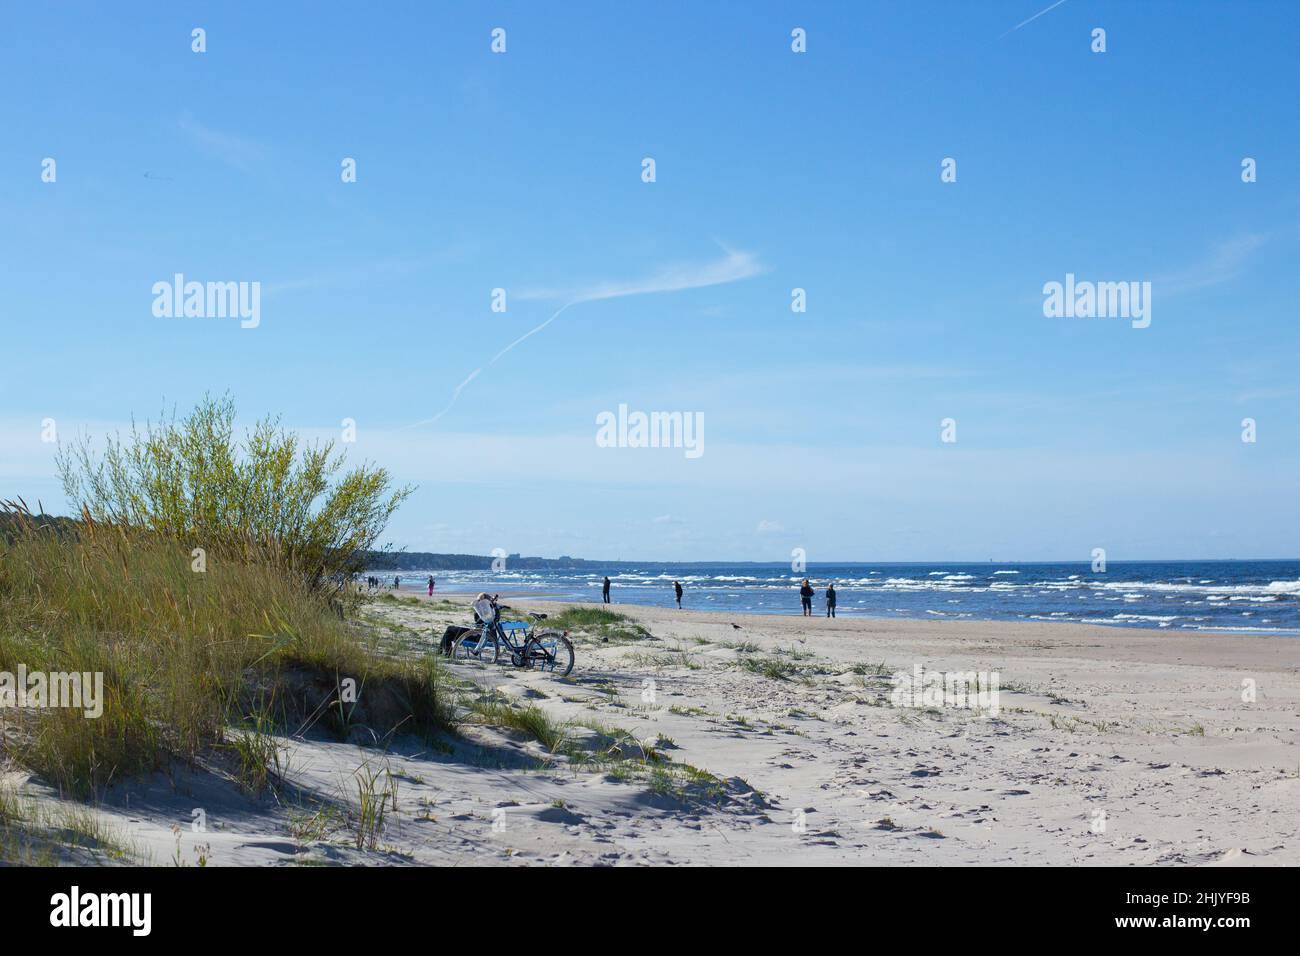 Jurmala Beach in Lettonia, vista autunnale. Mare, sabbia bianca. Foto di alta qualità Foto Stock